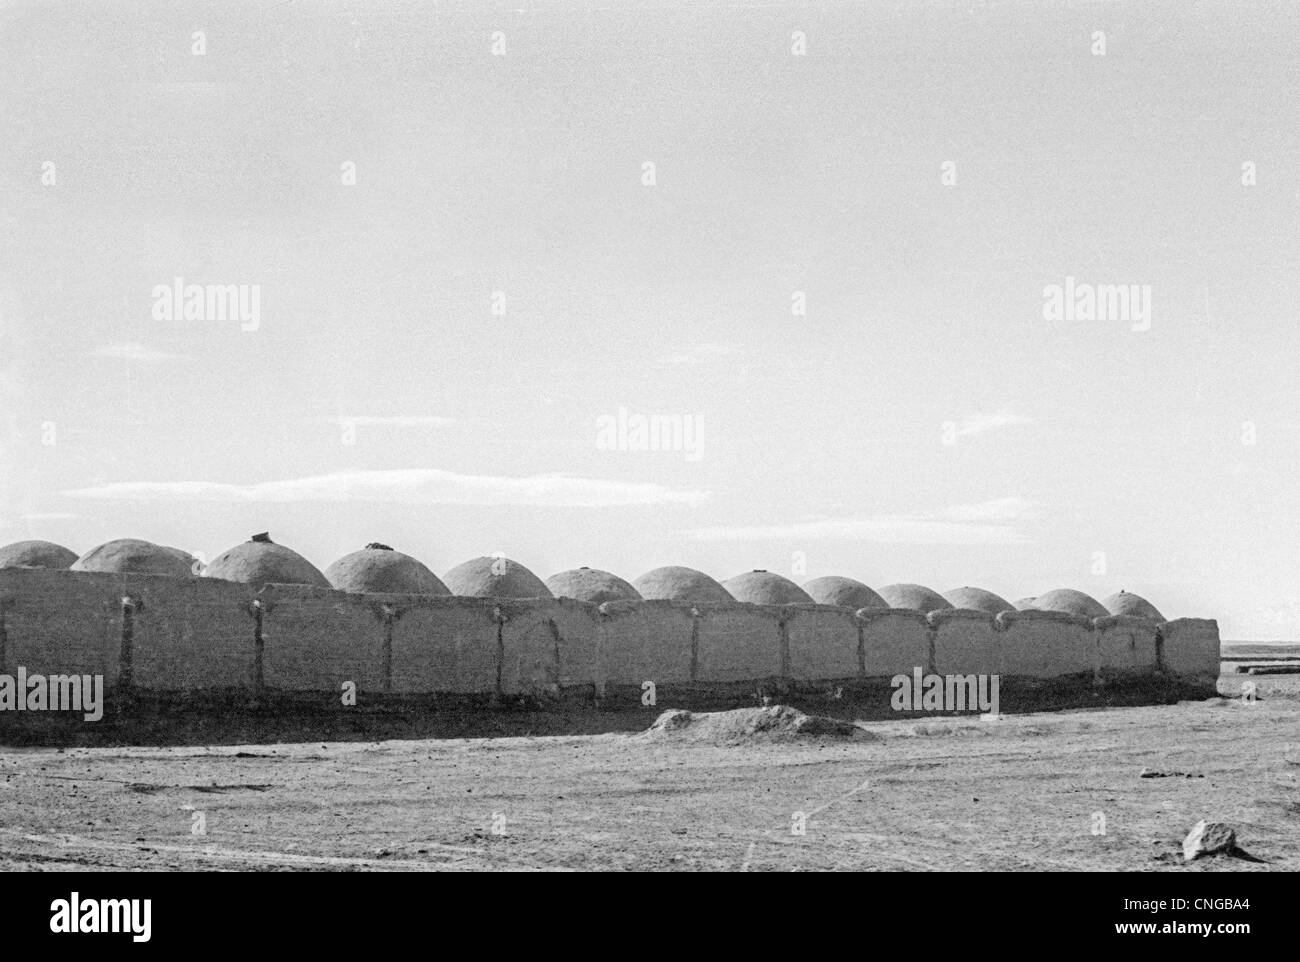 IRAN, ARAK: Mud village of domed houses in the high desert plateau near Arak, Iran. Black and white Archival photo, 1977 Stock Photo